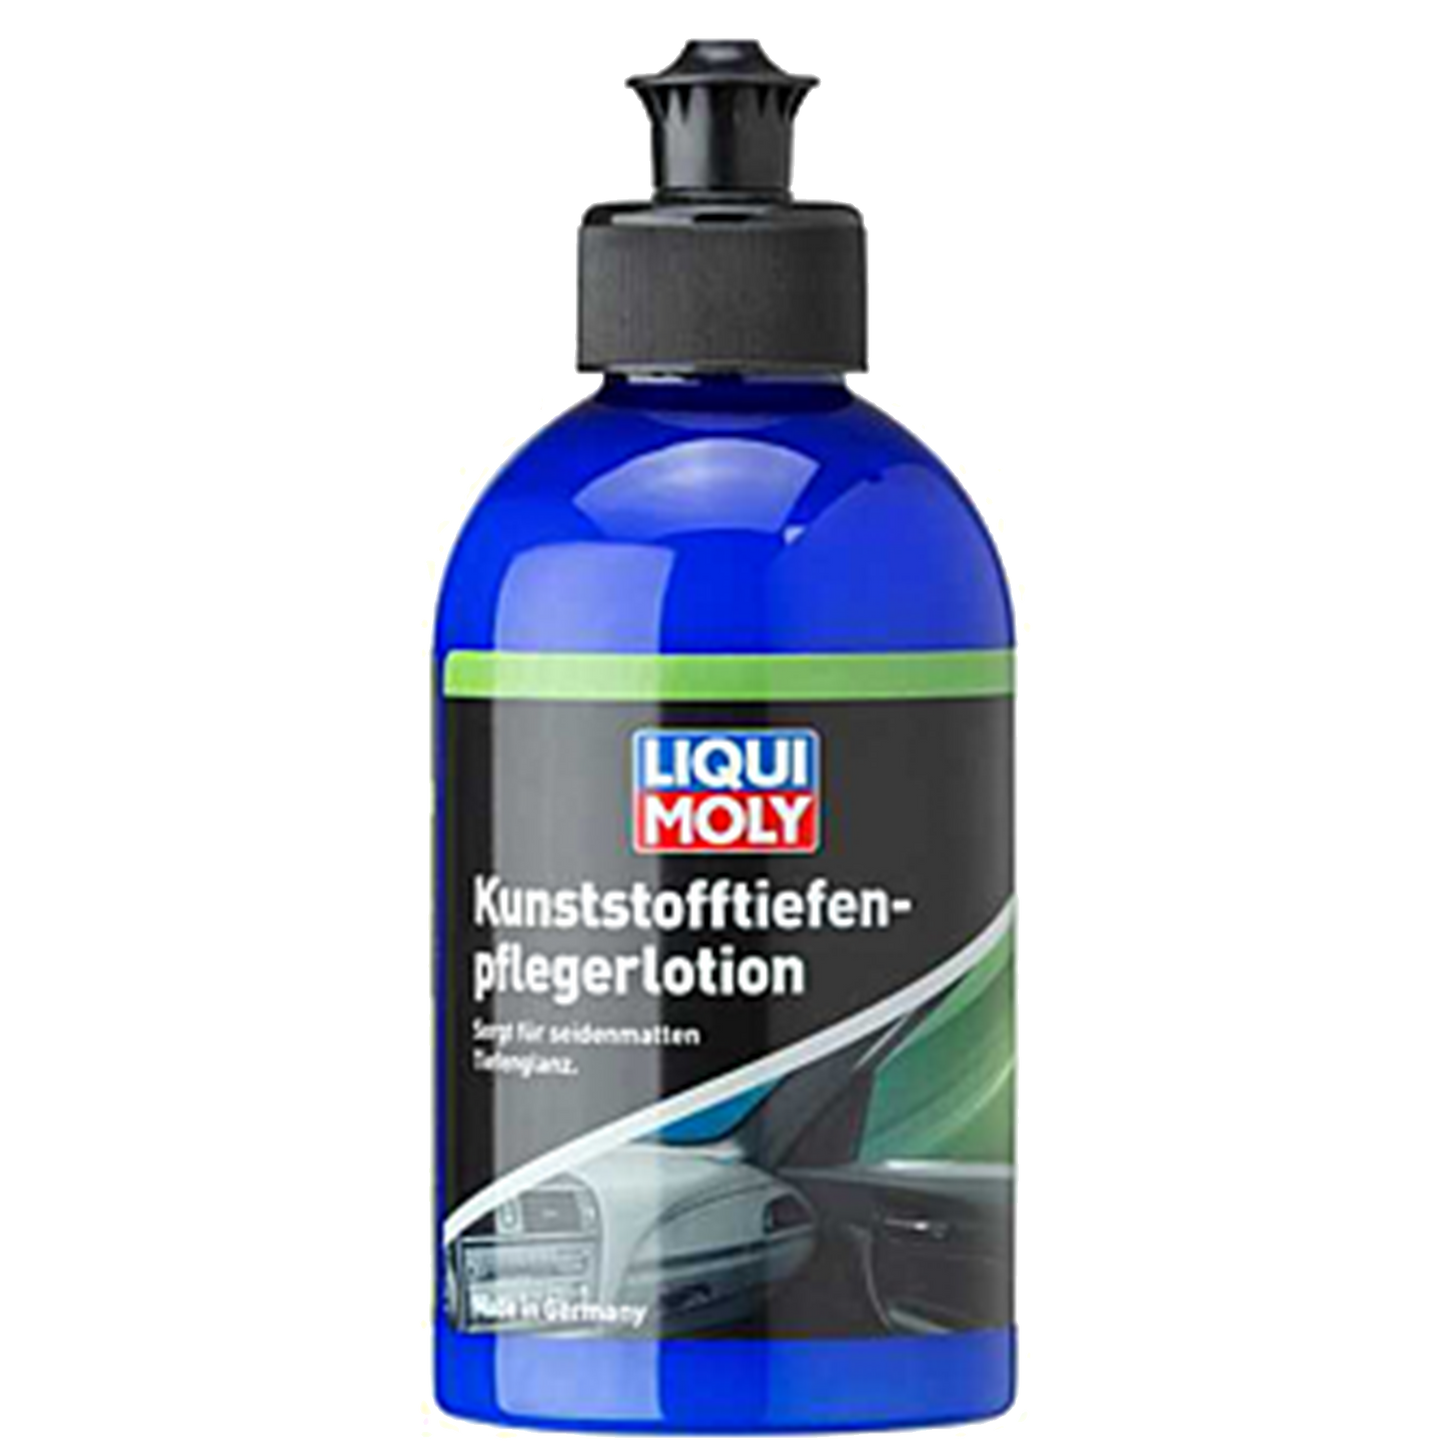 LIQUI MOLY Kunst­stoff­tie­fen­pfle­ger­lo­tion - 250ml